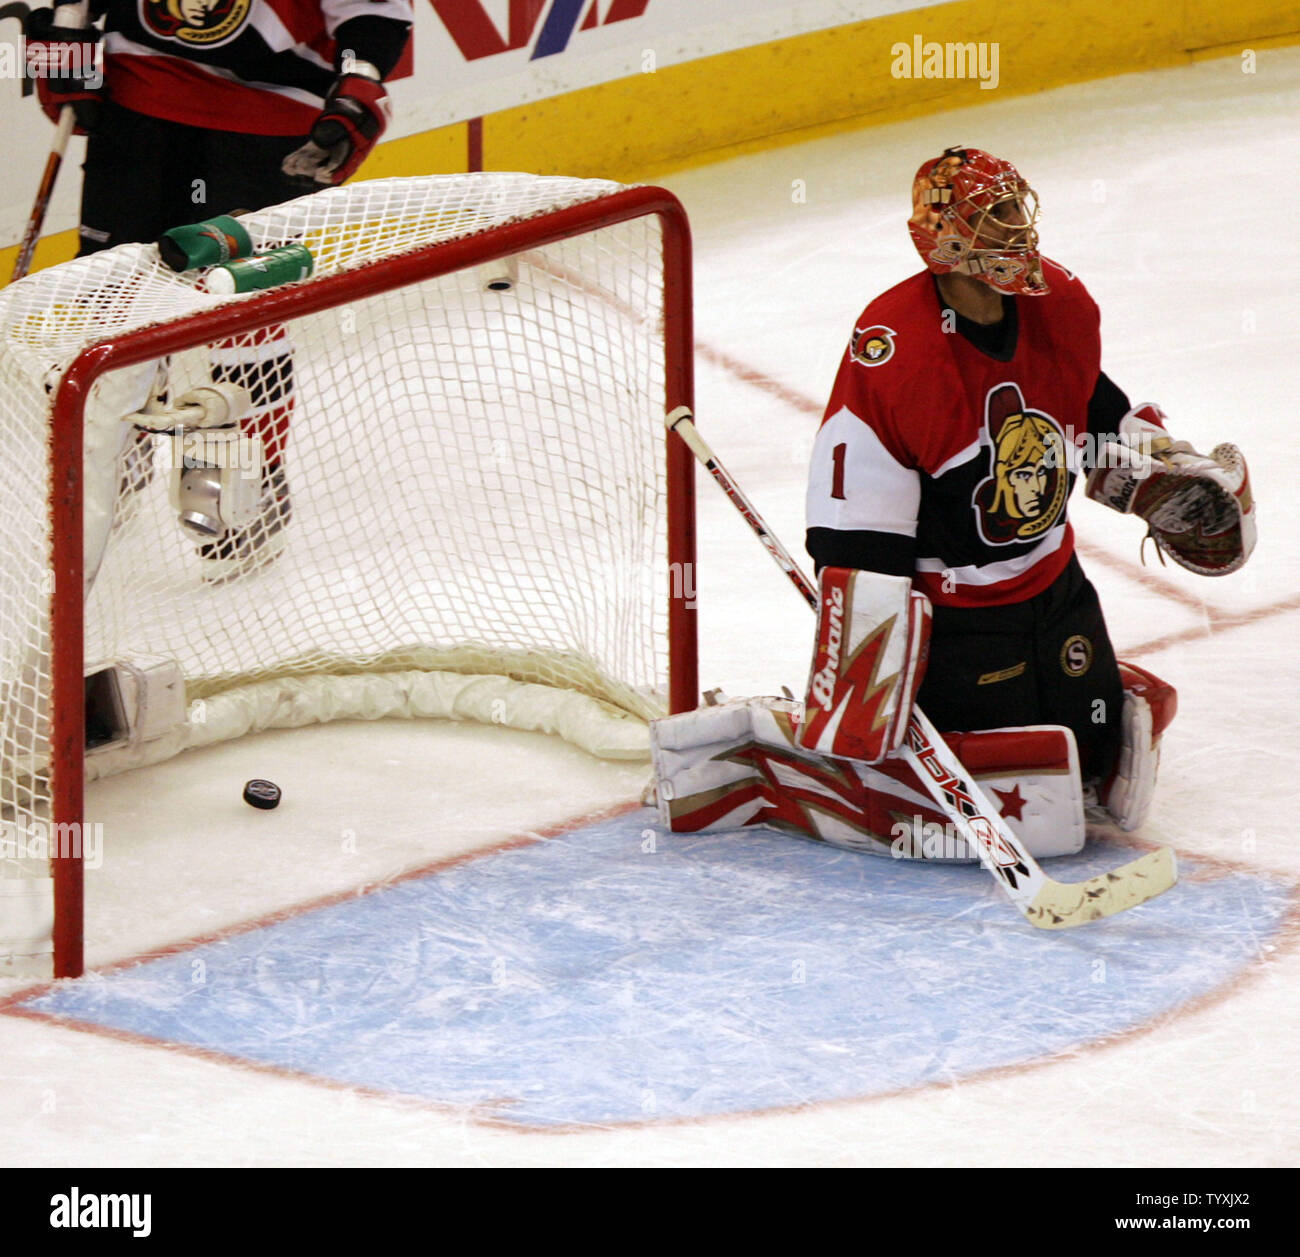 Ottawa Senators goalie Ray Emery (1) makes a pads save against the